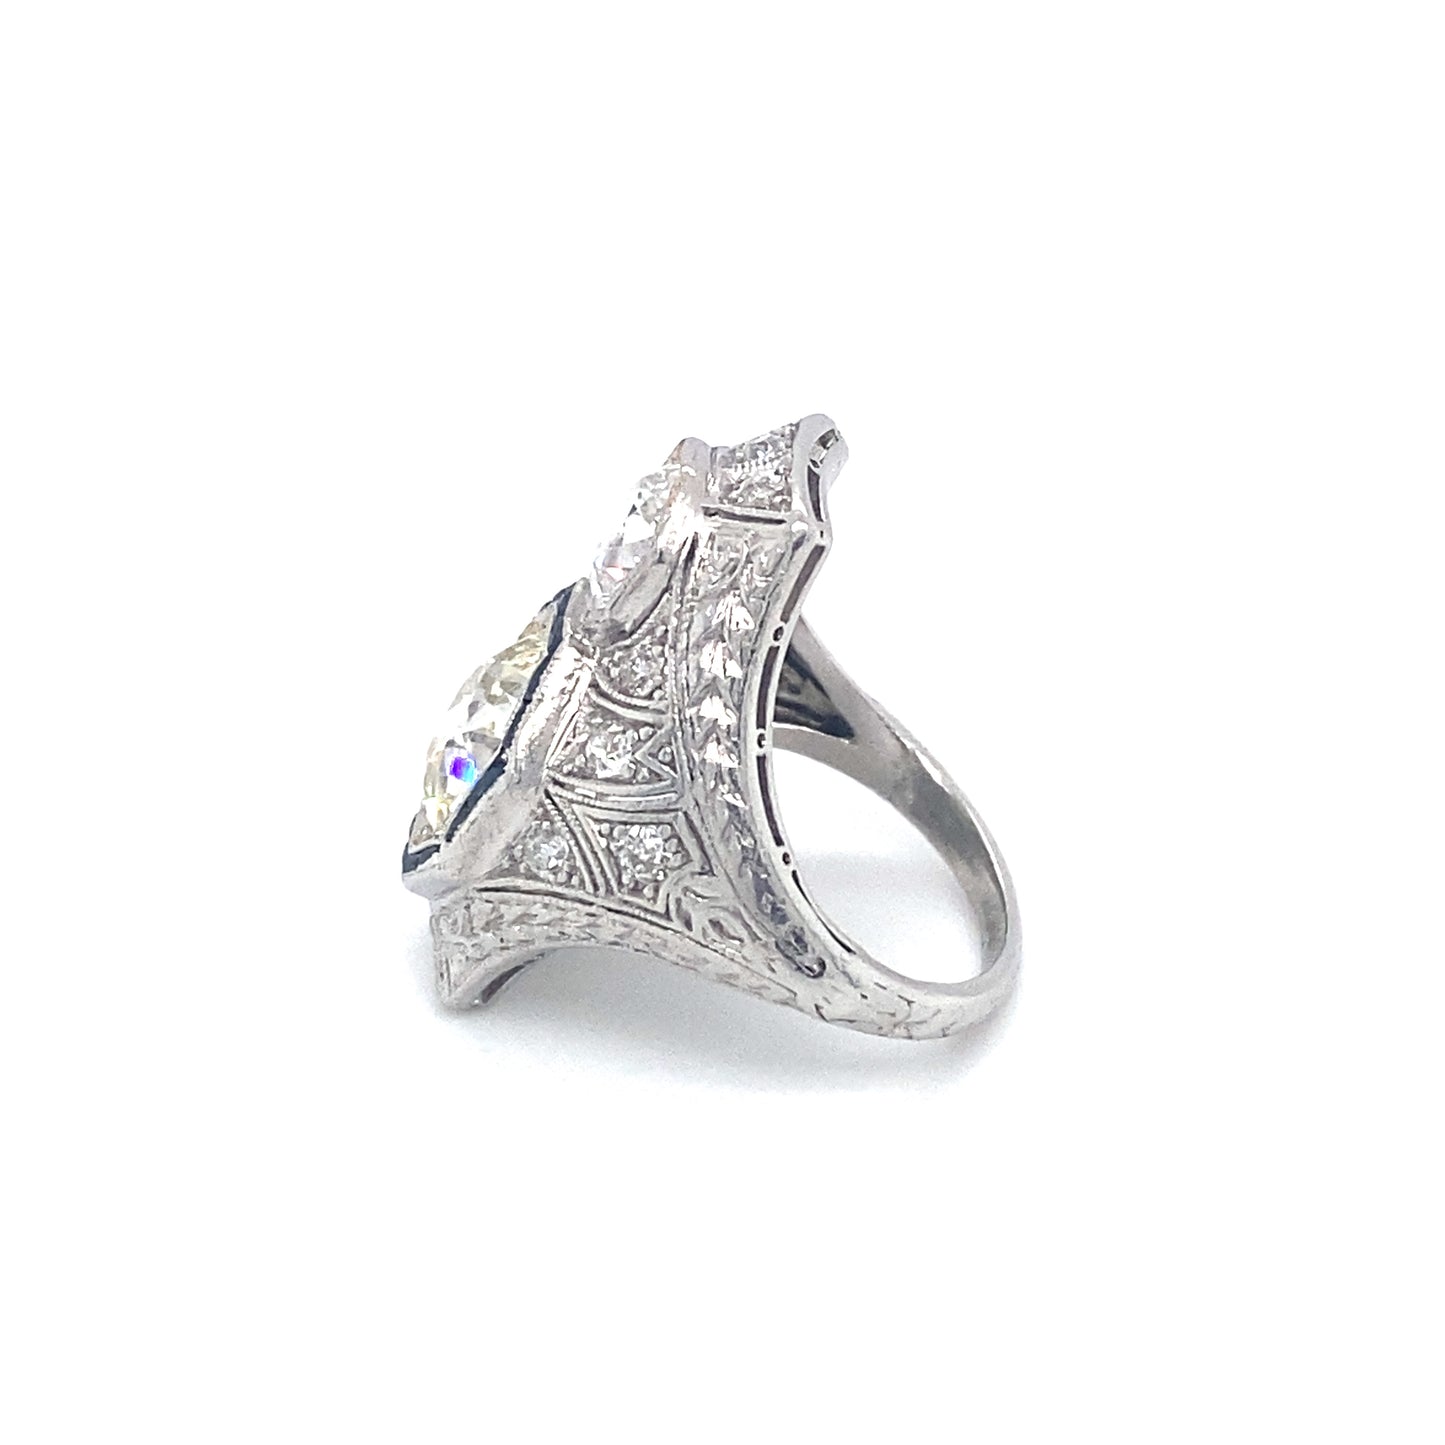 Circa 1920s Art Deco 2.50ct Diamond and Sapphire Cocktail Ring in Platinum